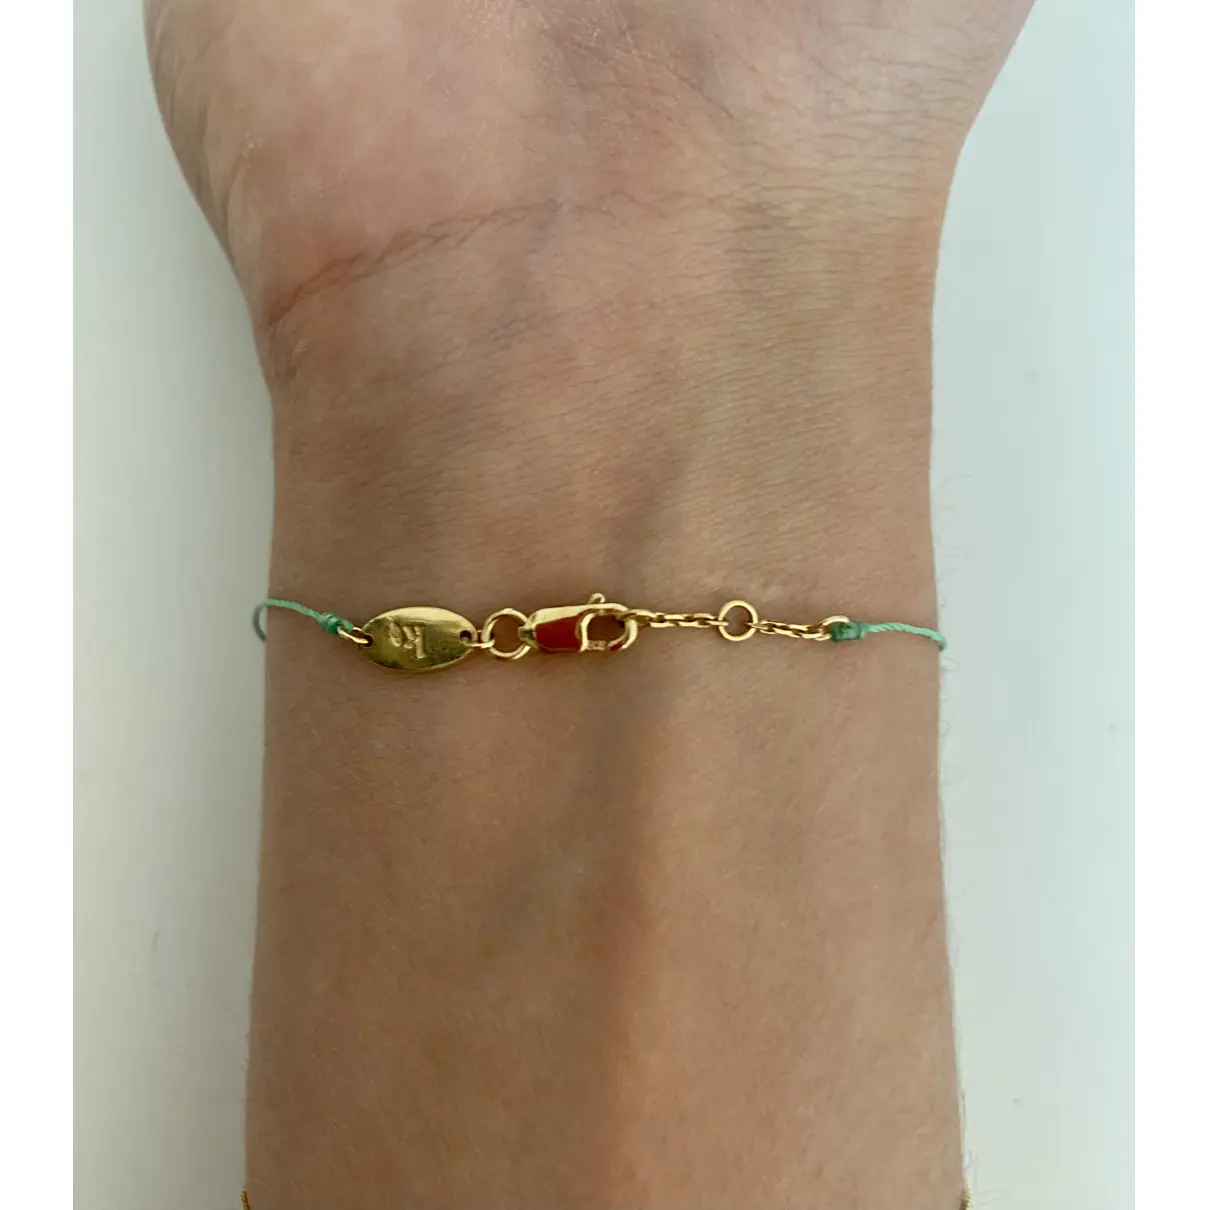 Buy Red Line Yellow gold bracelet online